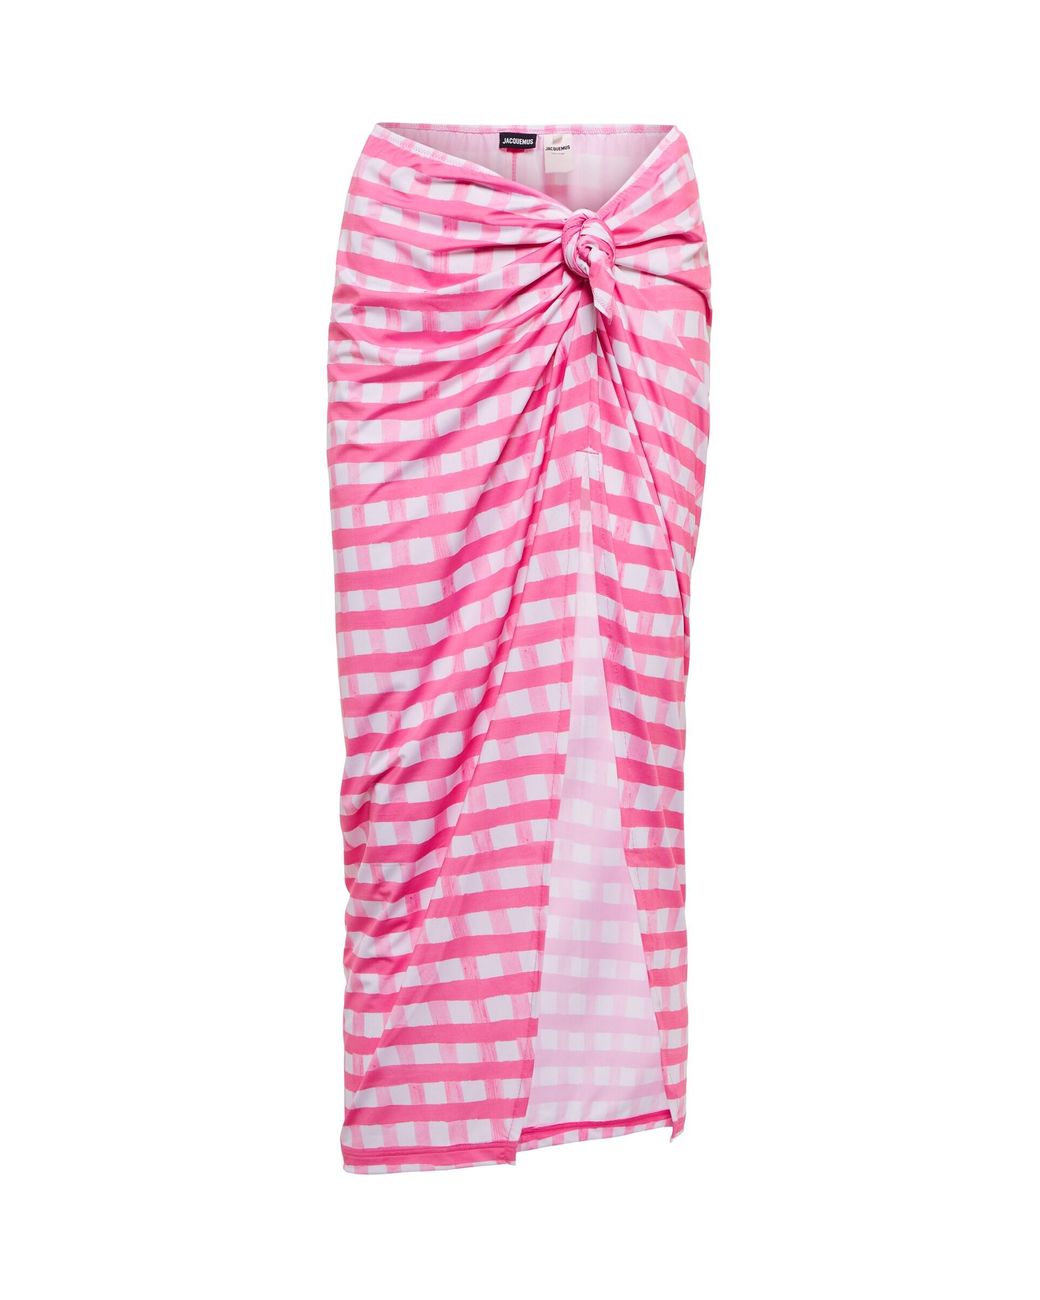 Jacquemus La Jupe Nodi Checked Midi Skirt in Pink | Lyst